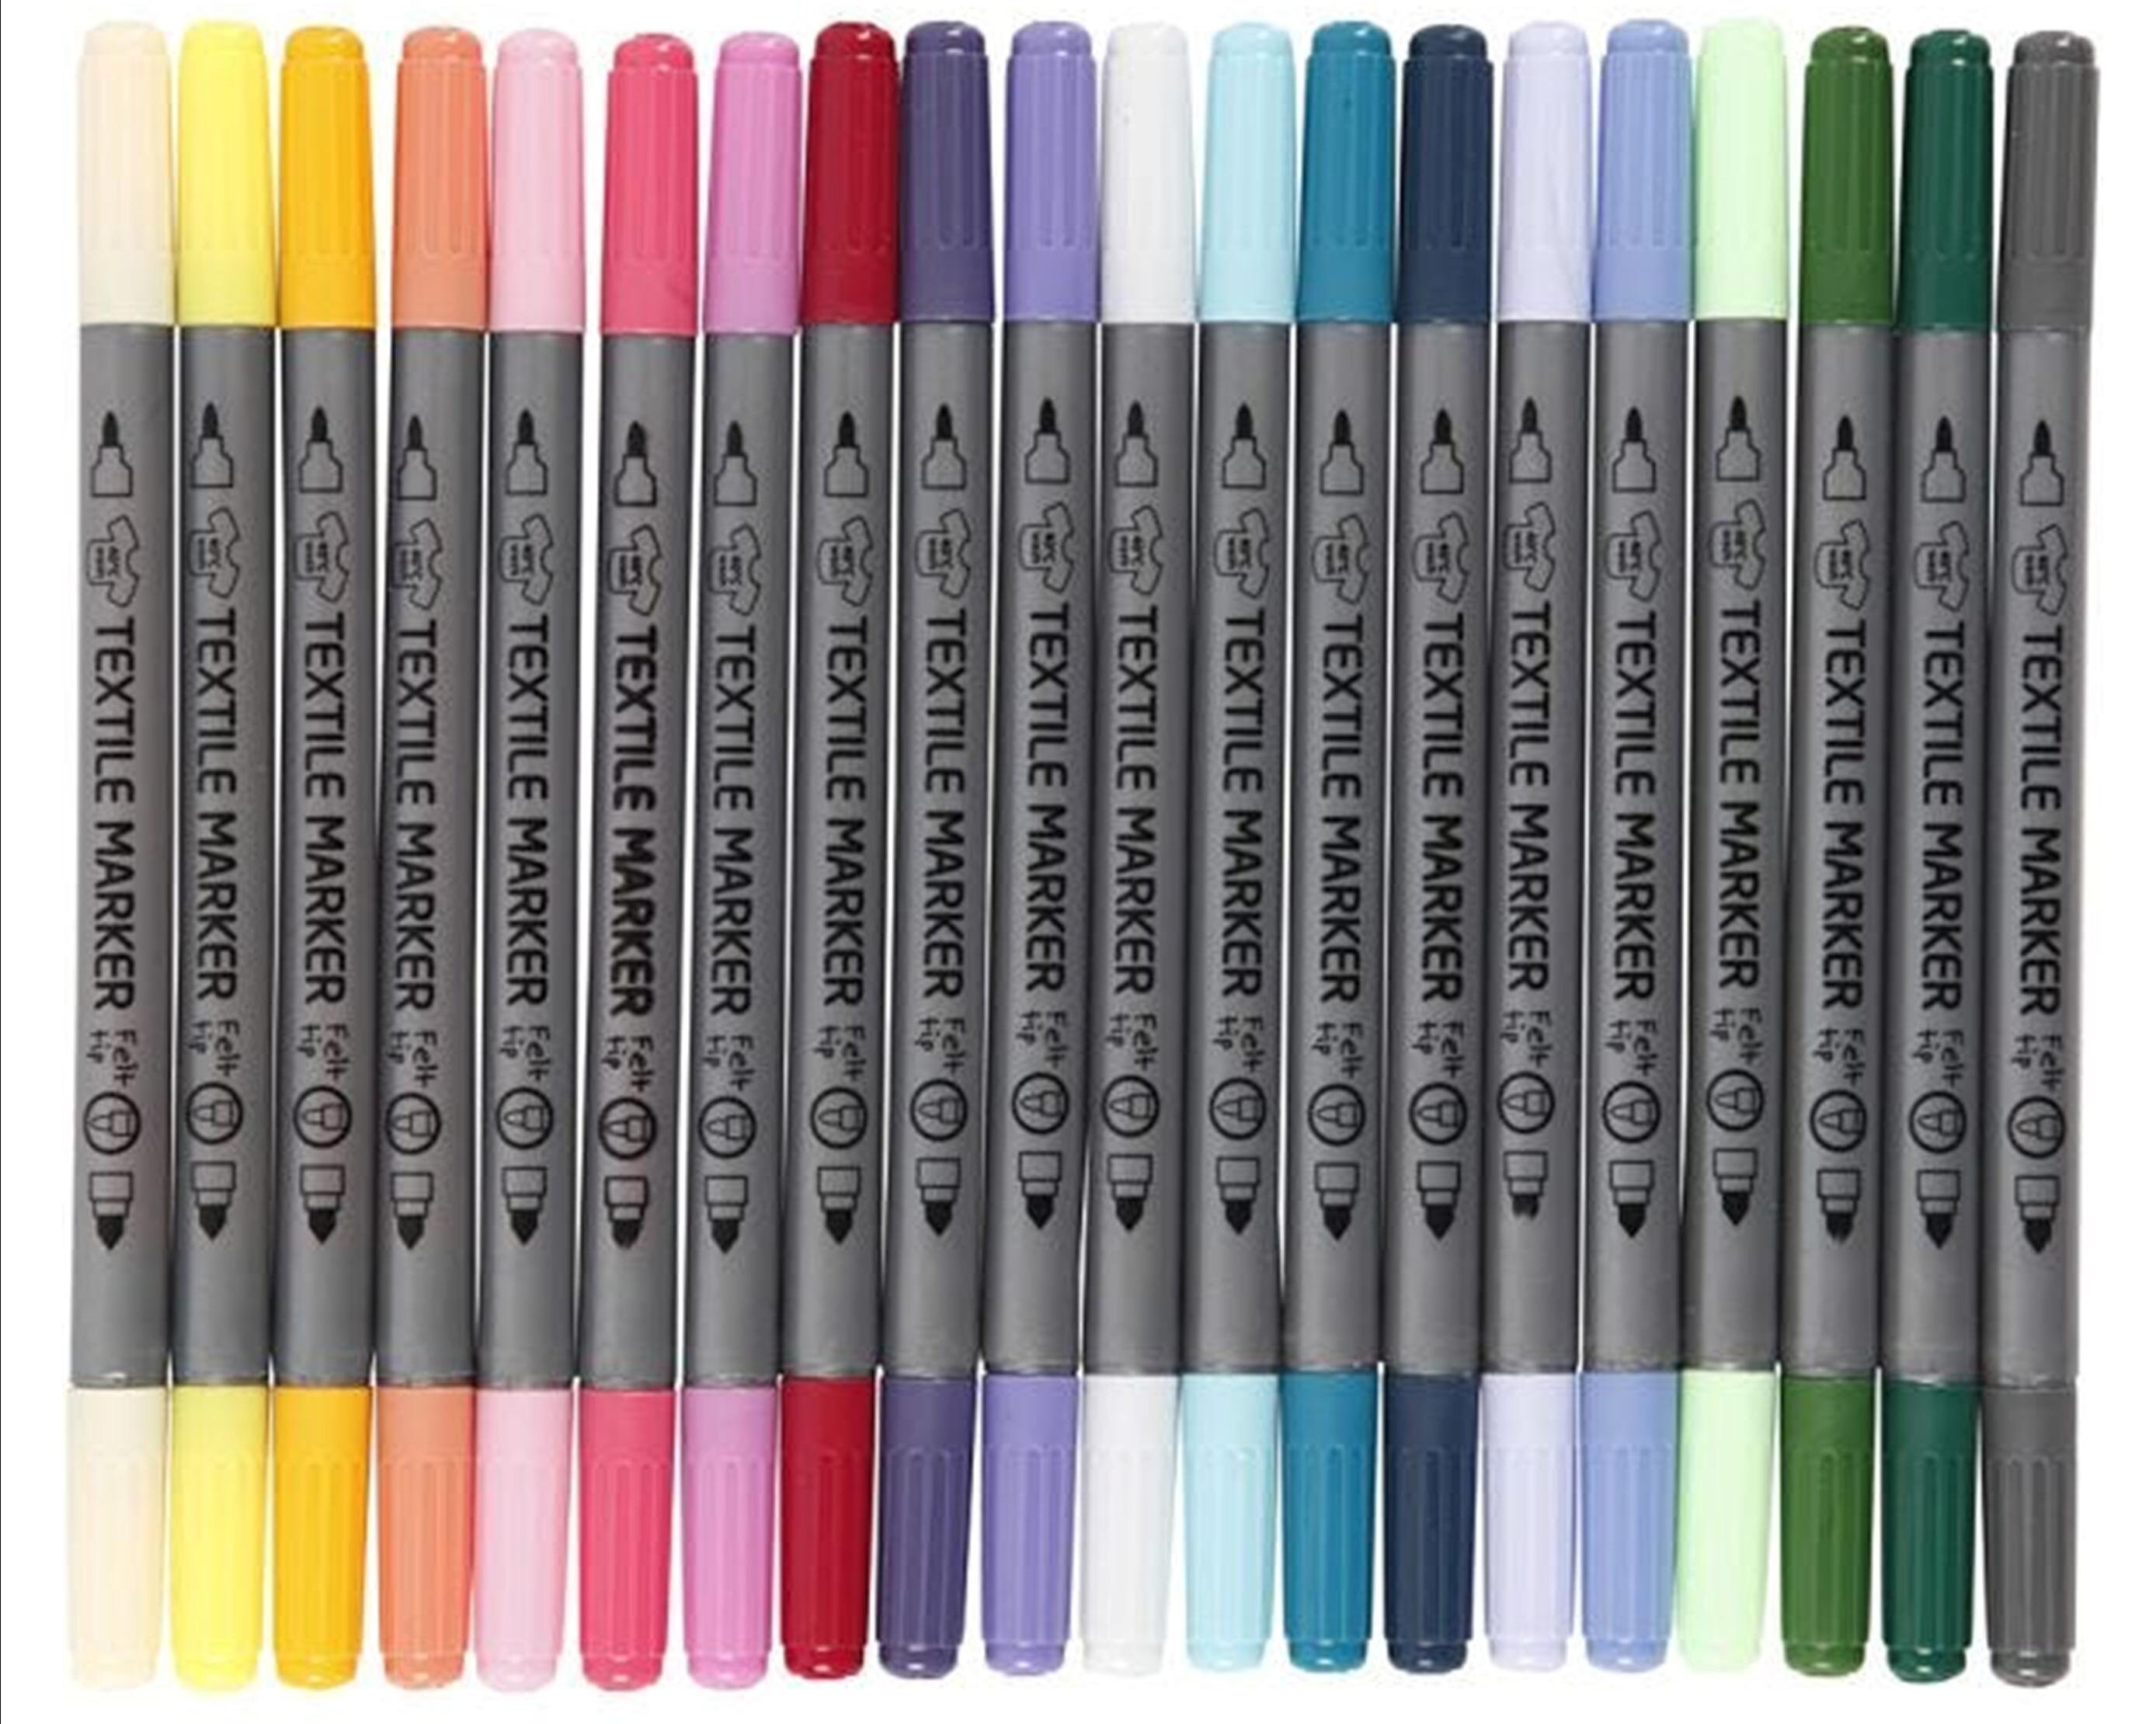 24 Color New Clothes Textile Markers Fabric Paint Pens DIY Crafts T-shirt  Pigment Painting Pen Writing Liner Marker Pen Supplies